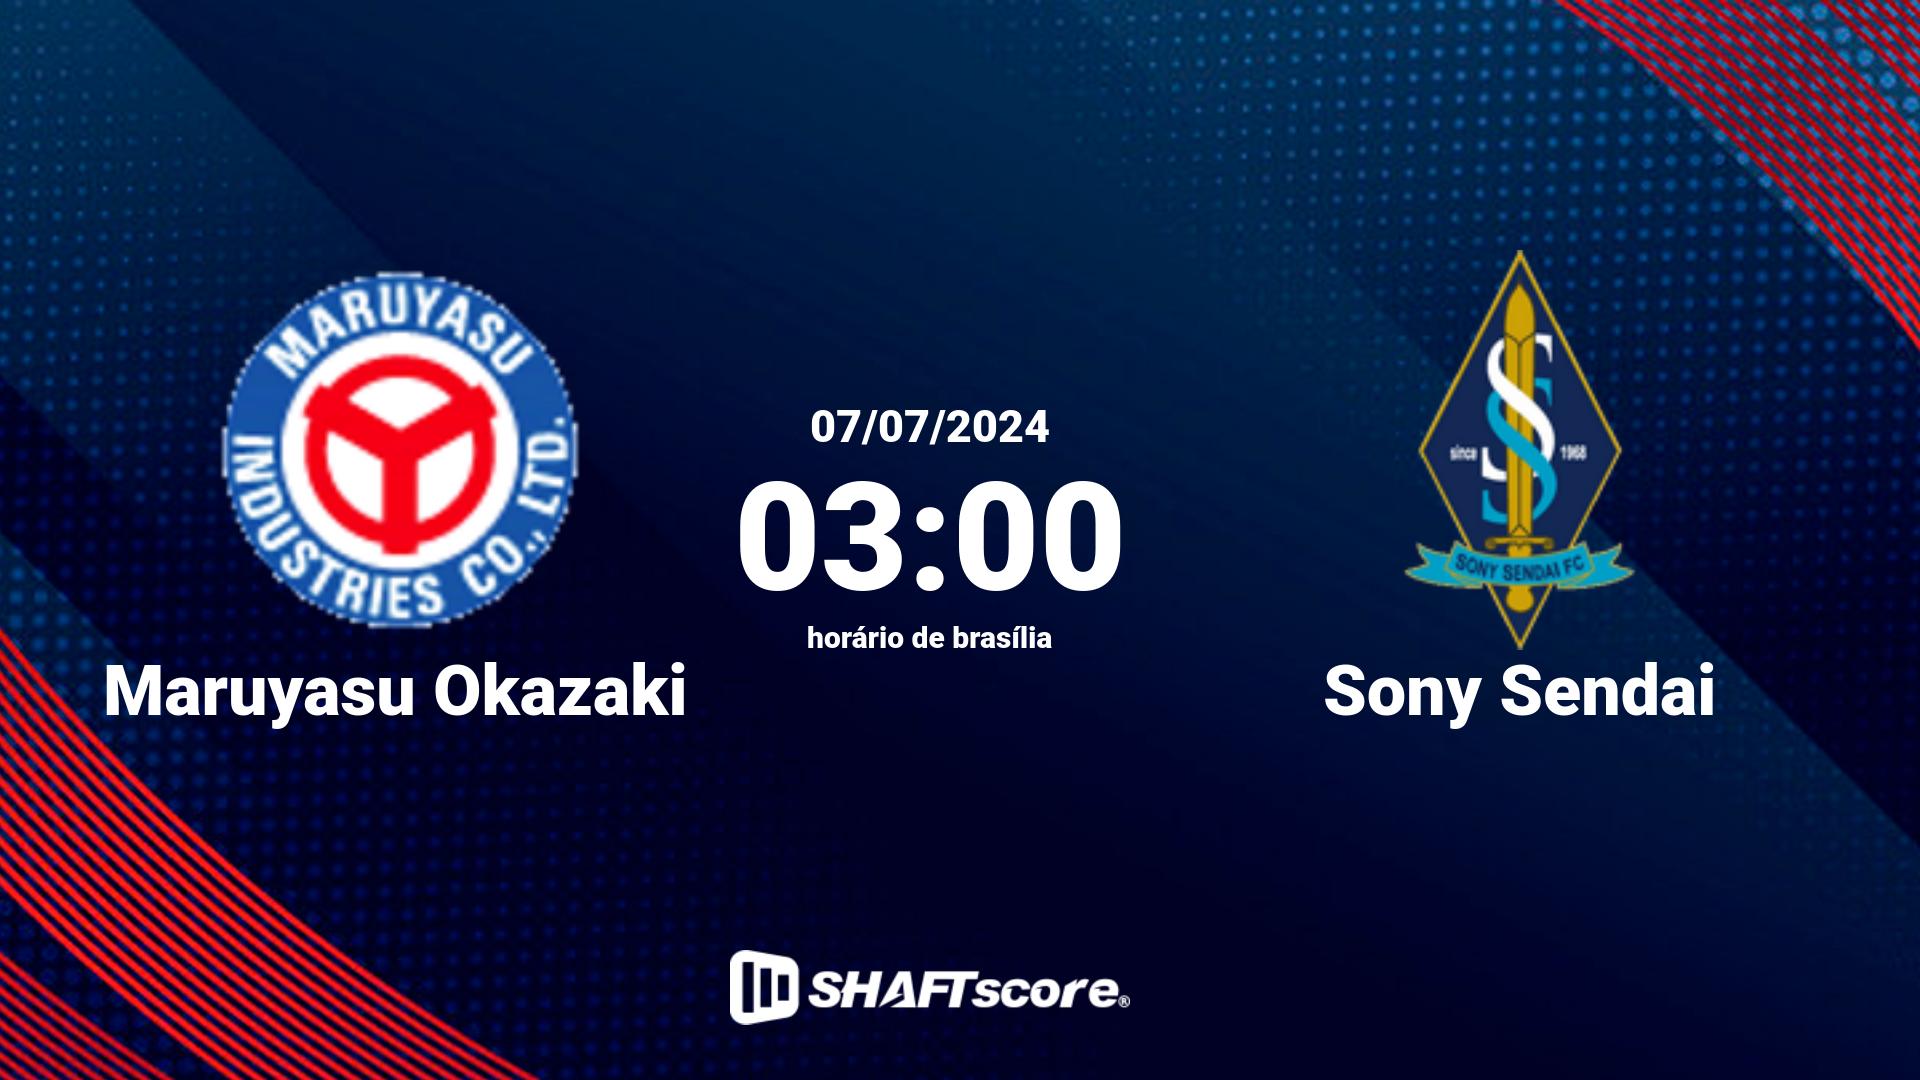 Estatísticas do jogo Maruyasu Okazaki vs Sony Sendai 07.07 03:00